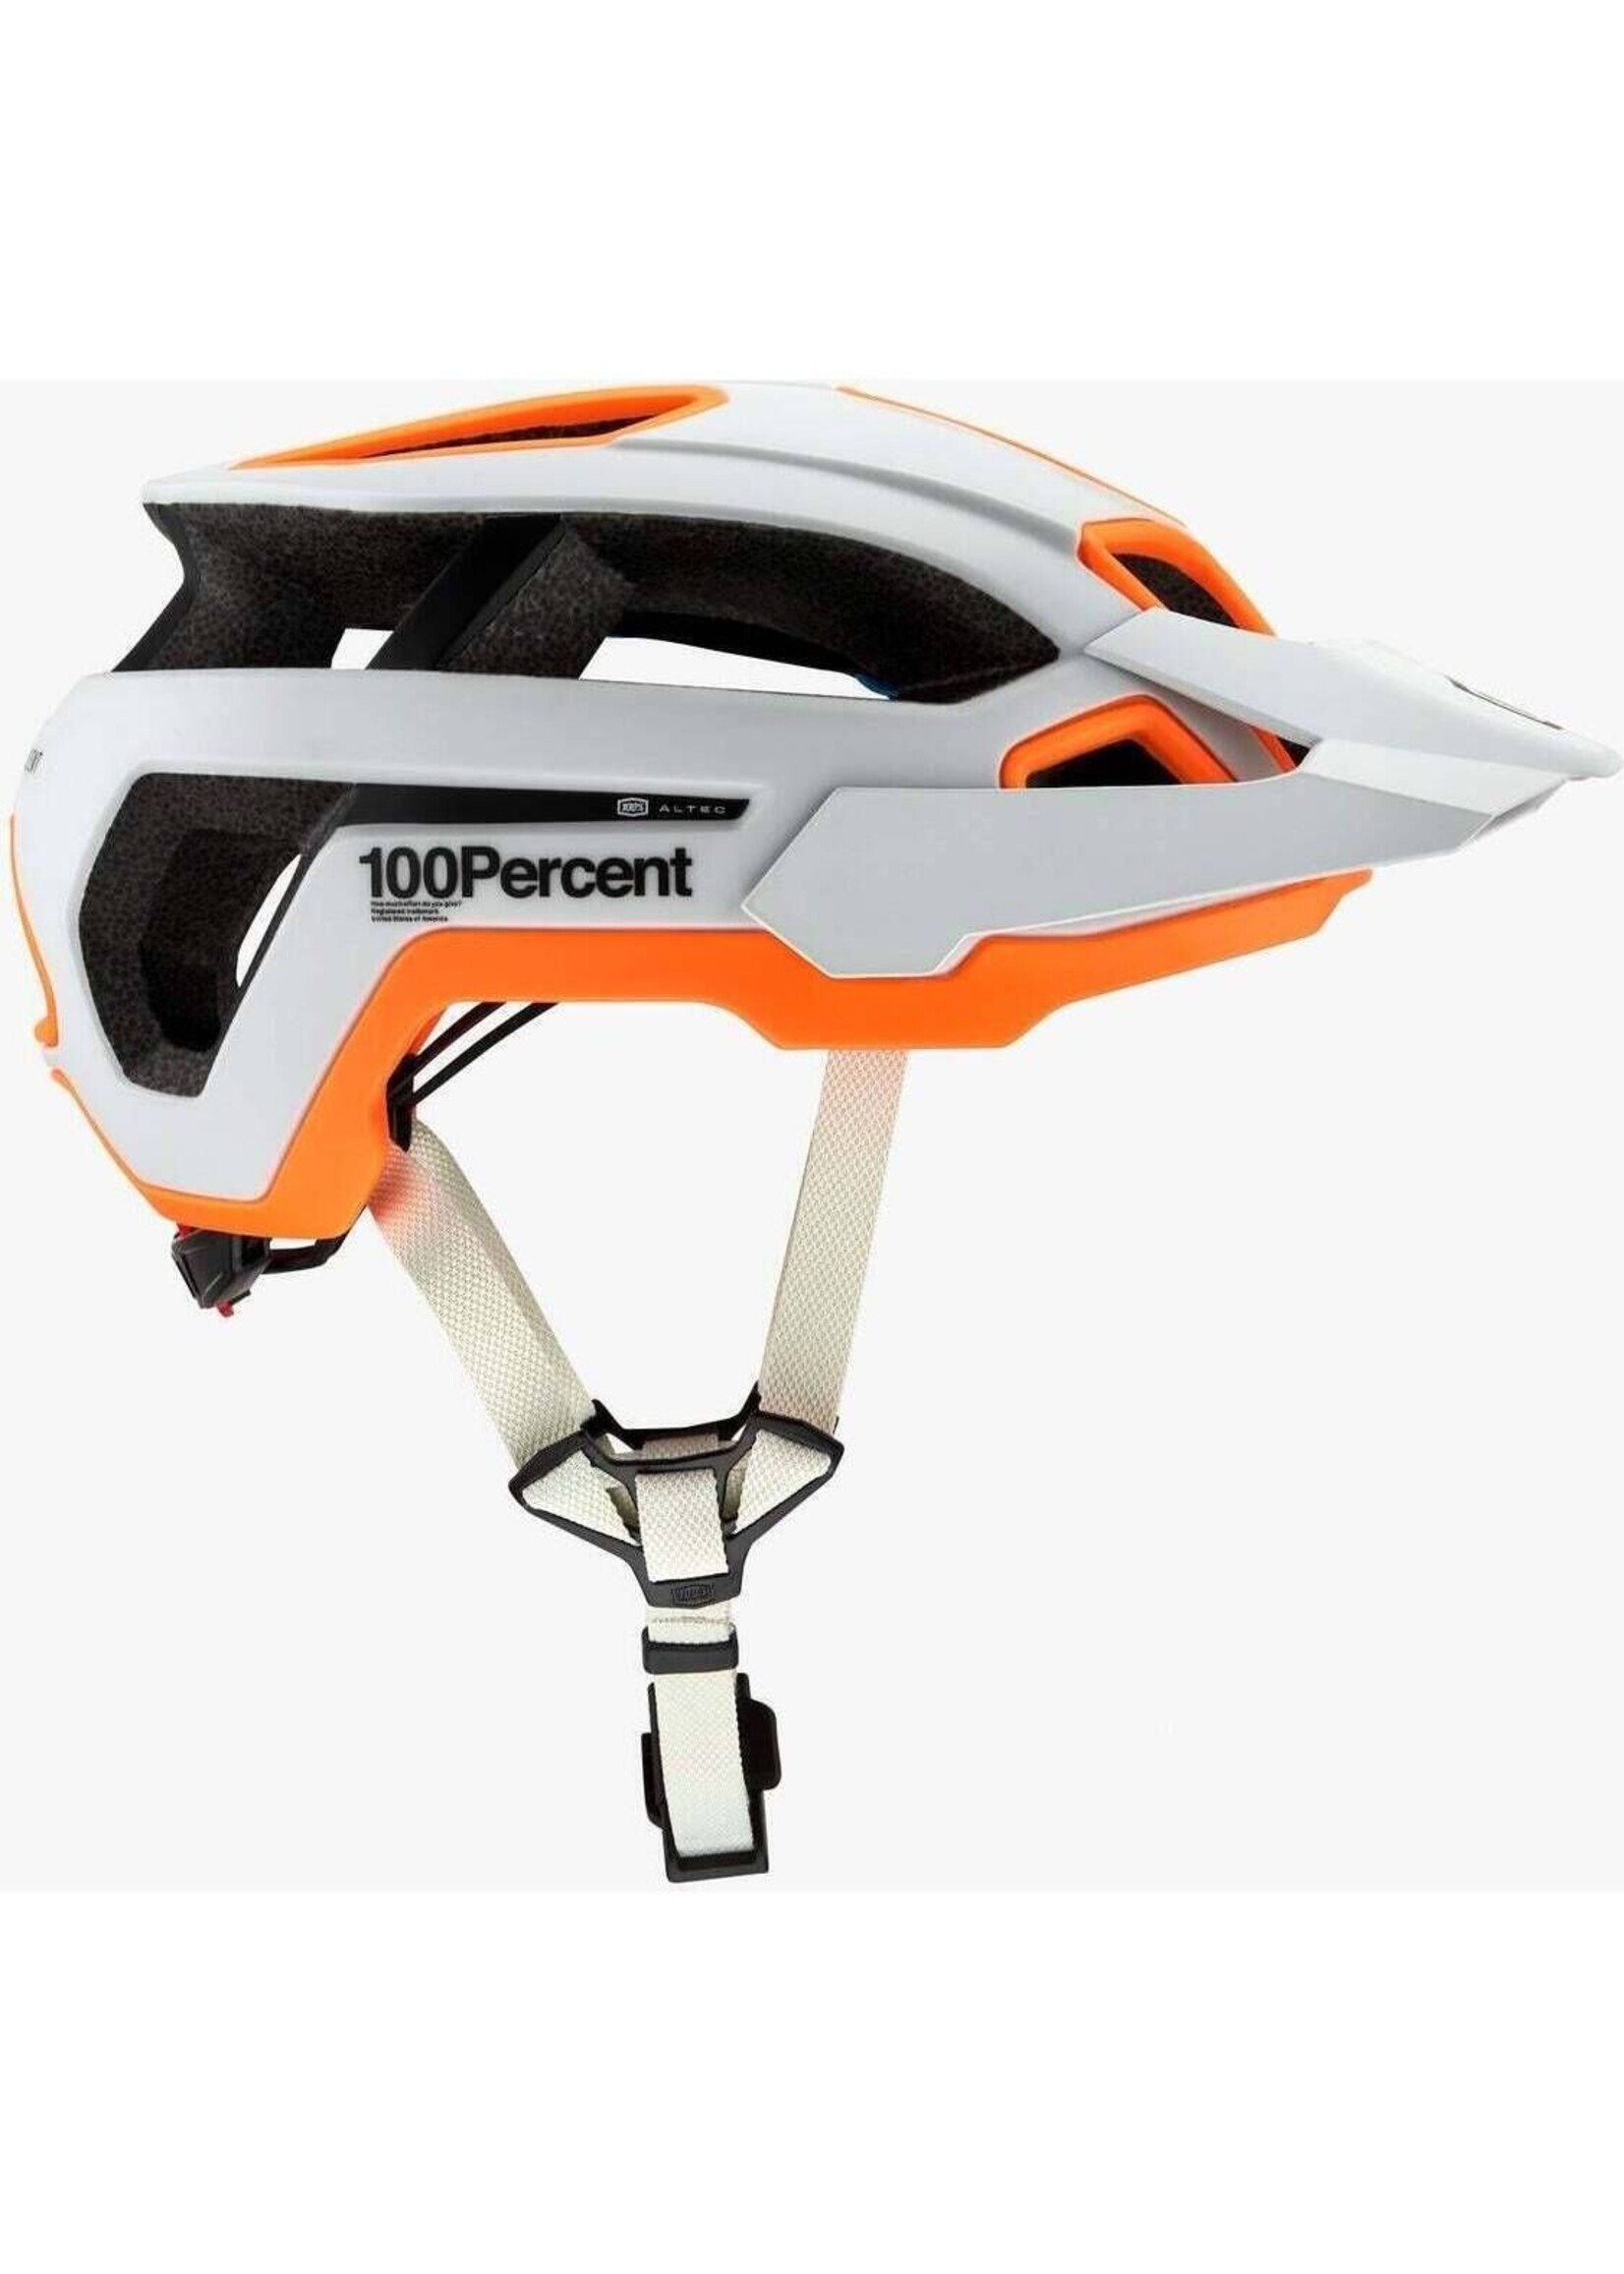 100 Percent 100% Altec Helmet With Fidlock